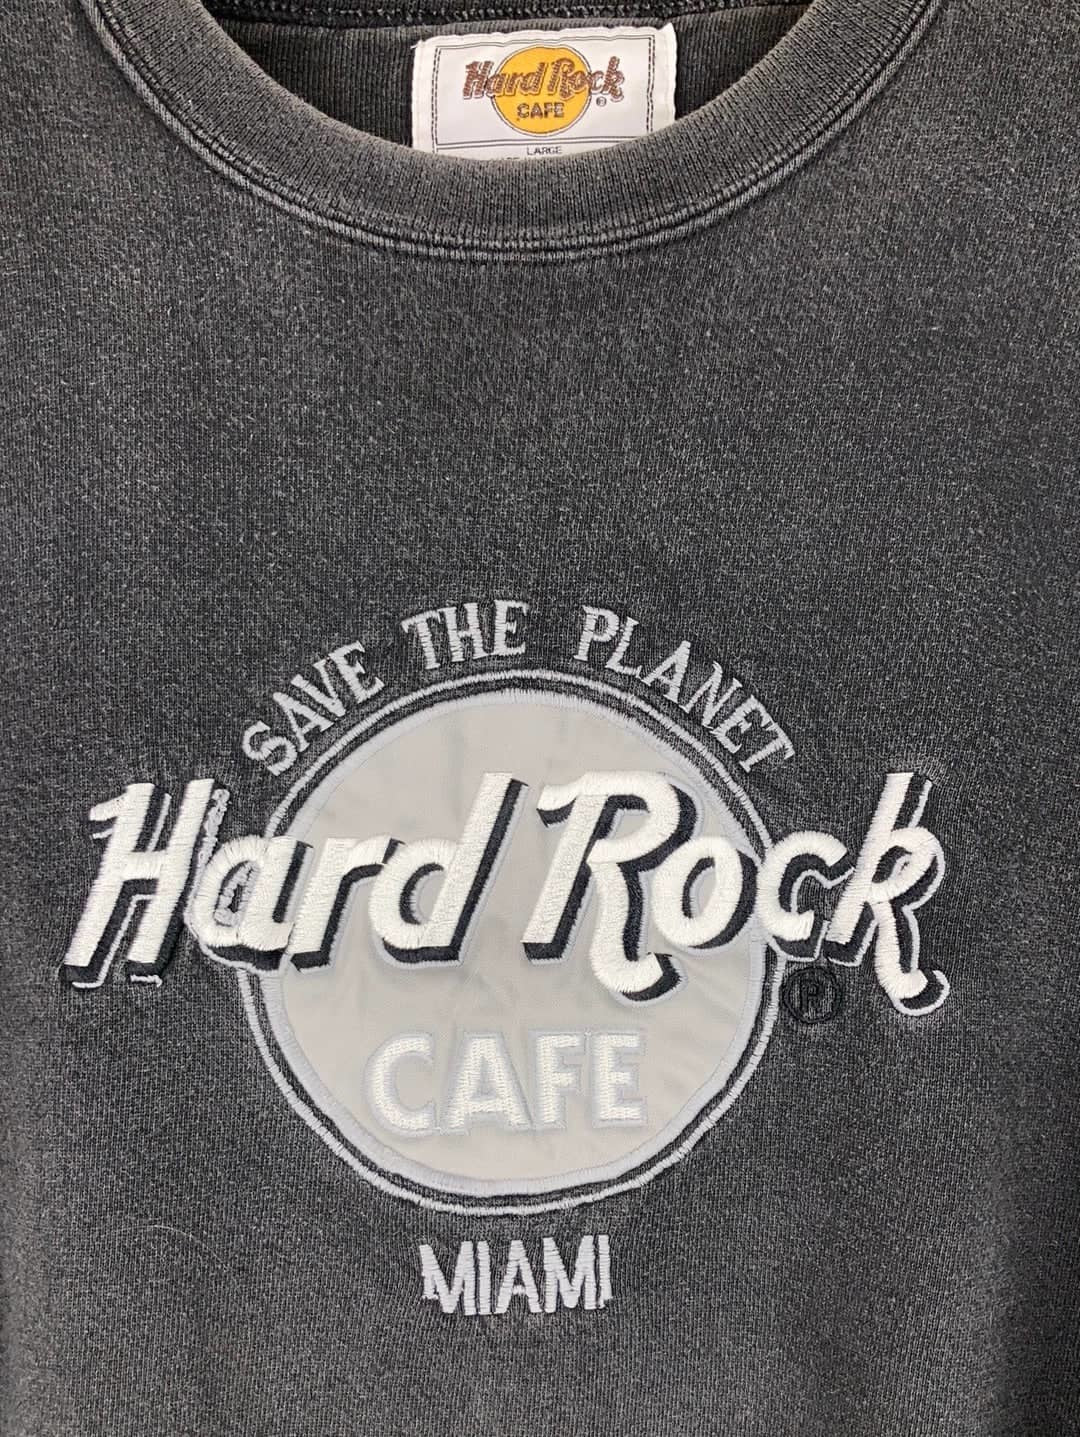 Hard Rock Cafe “Miami” Sweater (L)